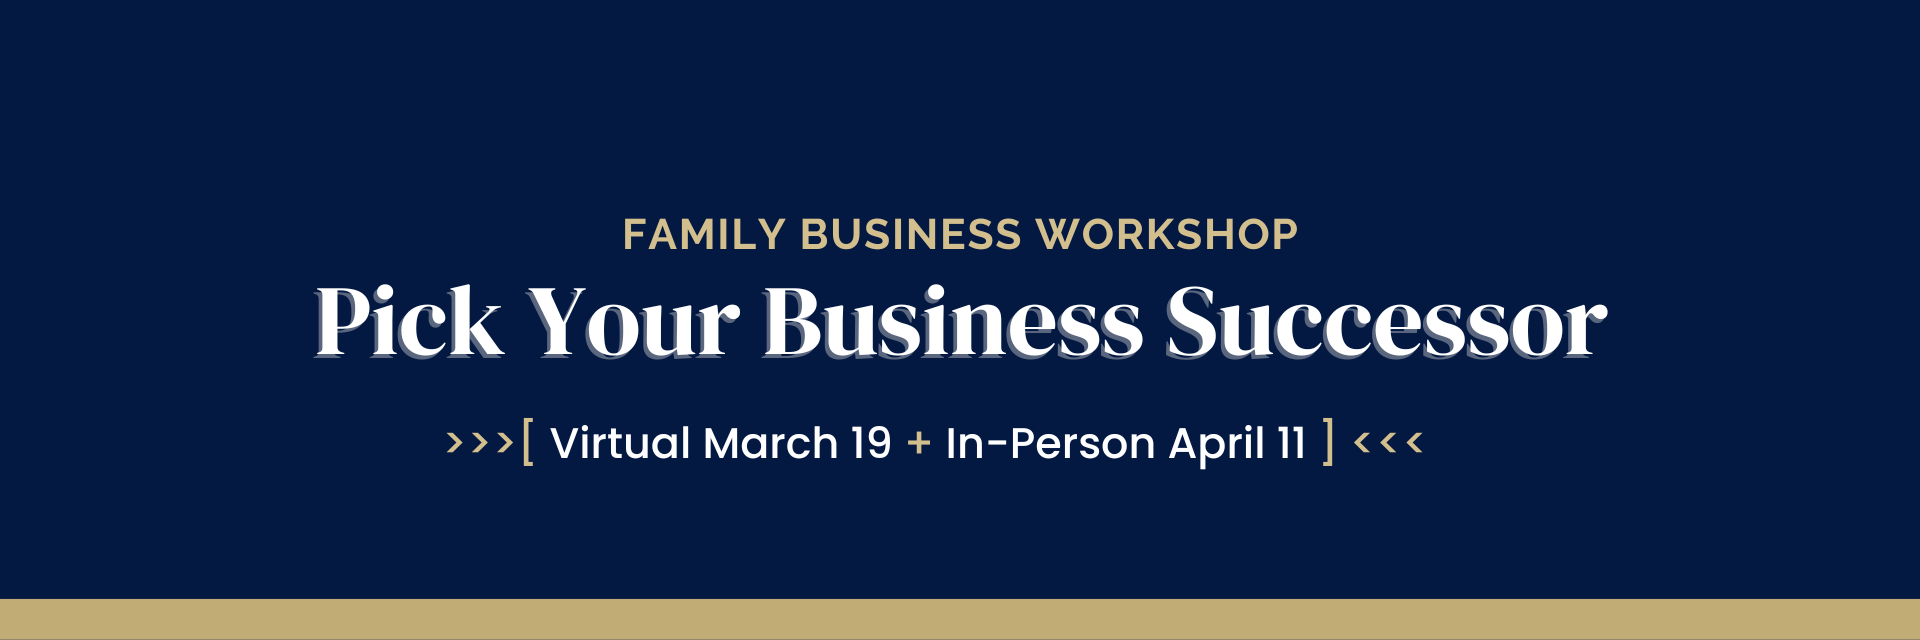 Pick your business successor workshop